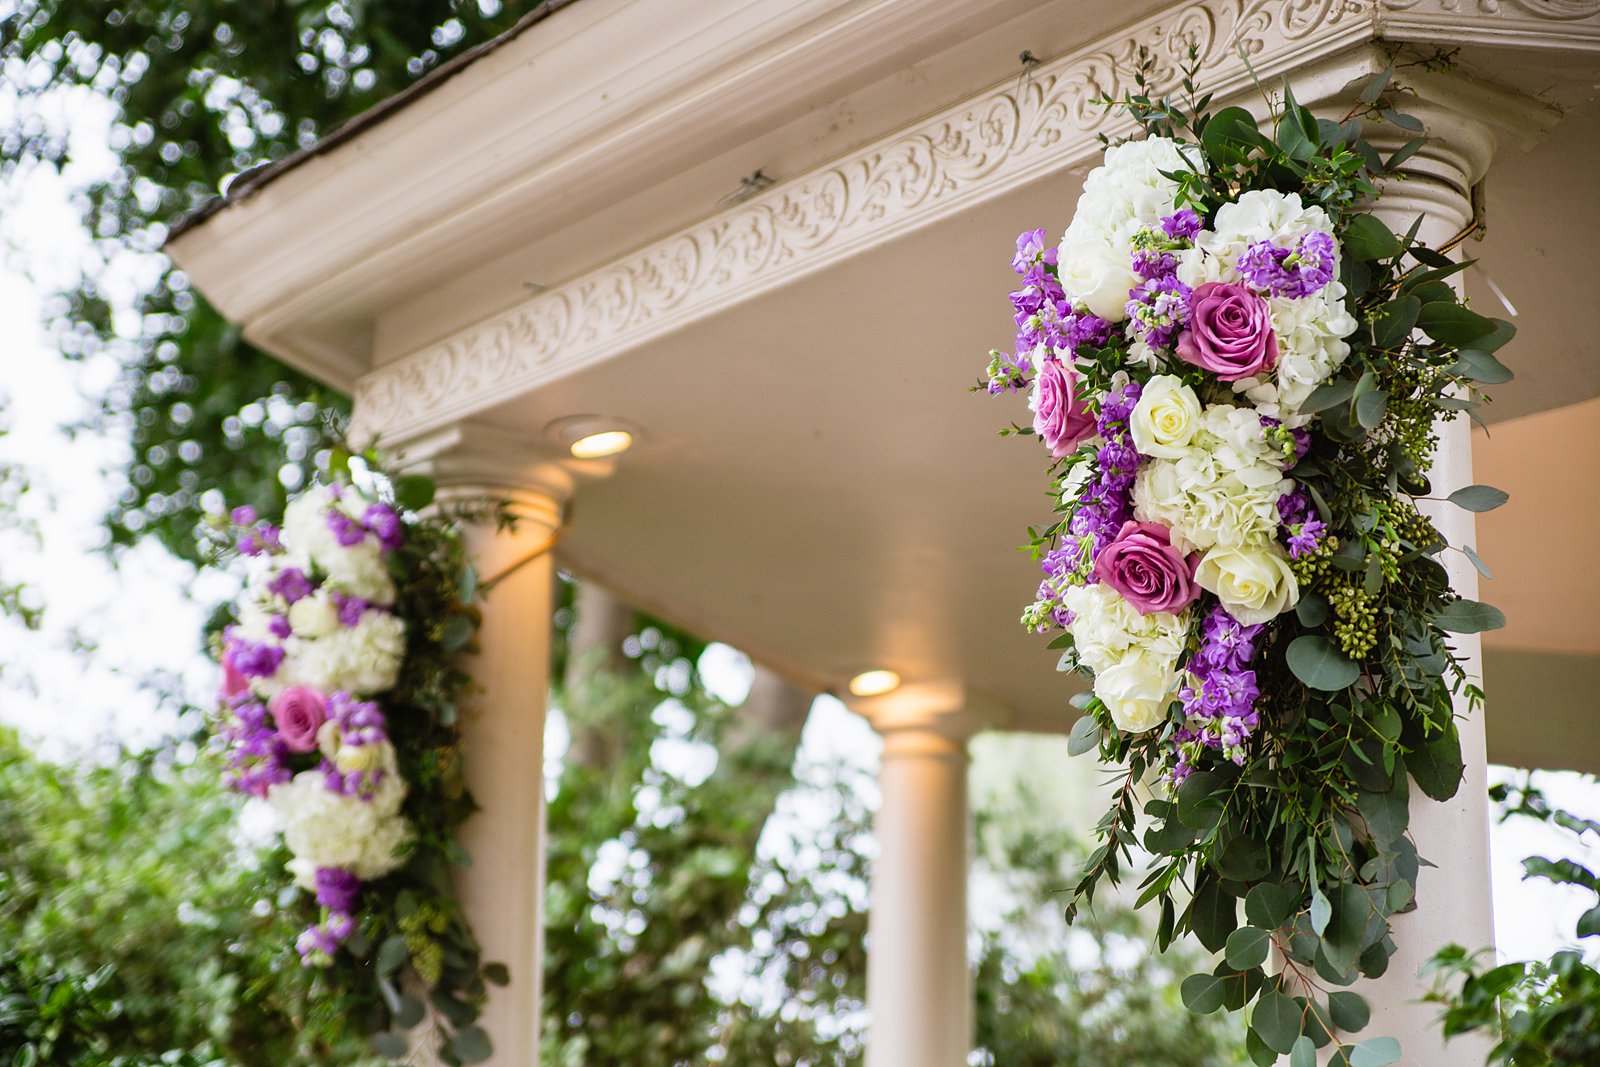 White and purple ceremony arch decor on a garden gazebo at The Wright House wedding by Arizona wedding photographer PMA Photography.